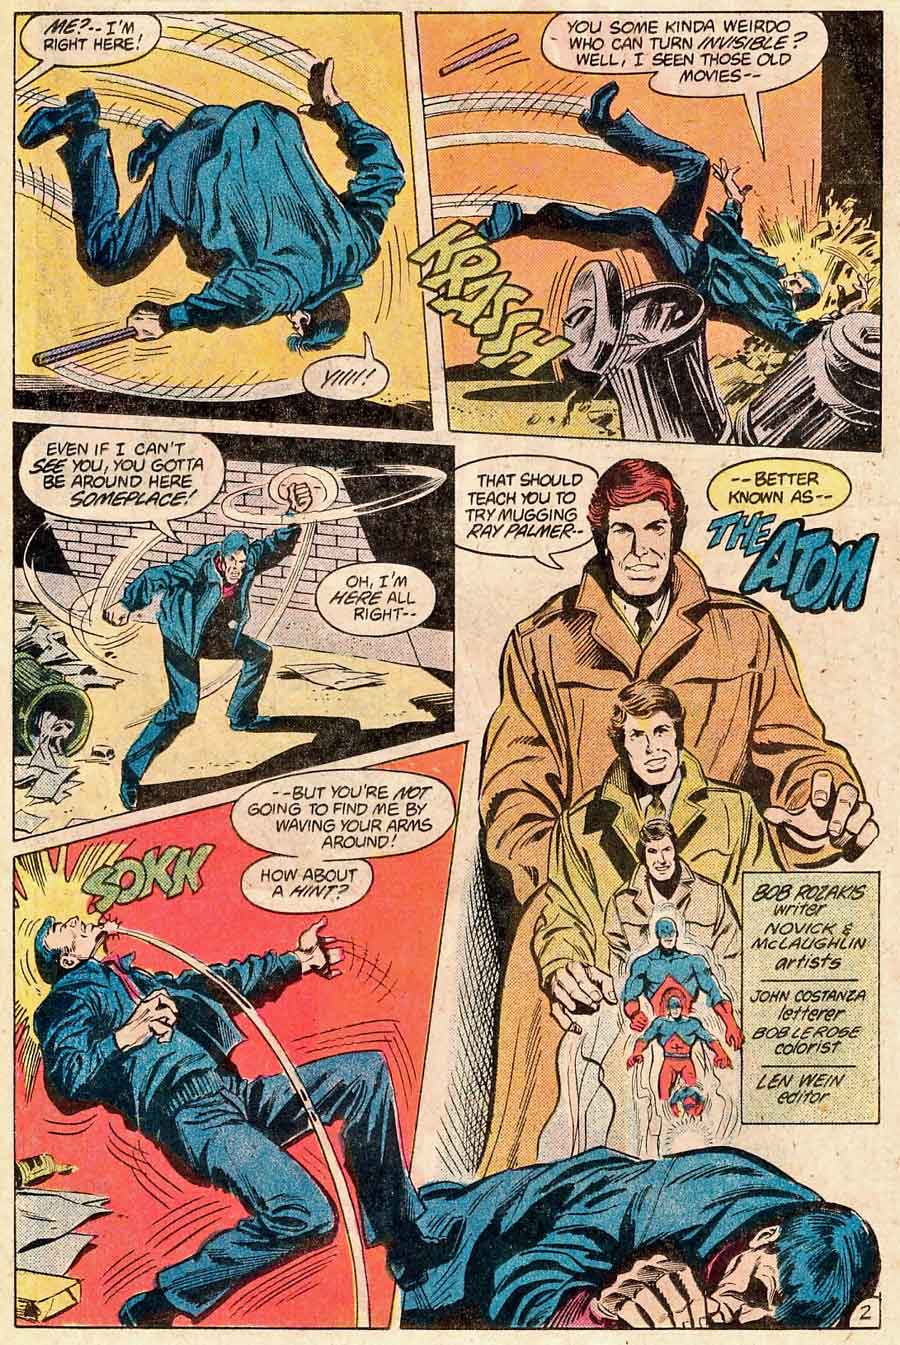 World’s Finest Comics #283 (September 1982) - The Atom in The Mugger by Bob Rozakis, Irv Novick, and Frank McLaughlin